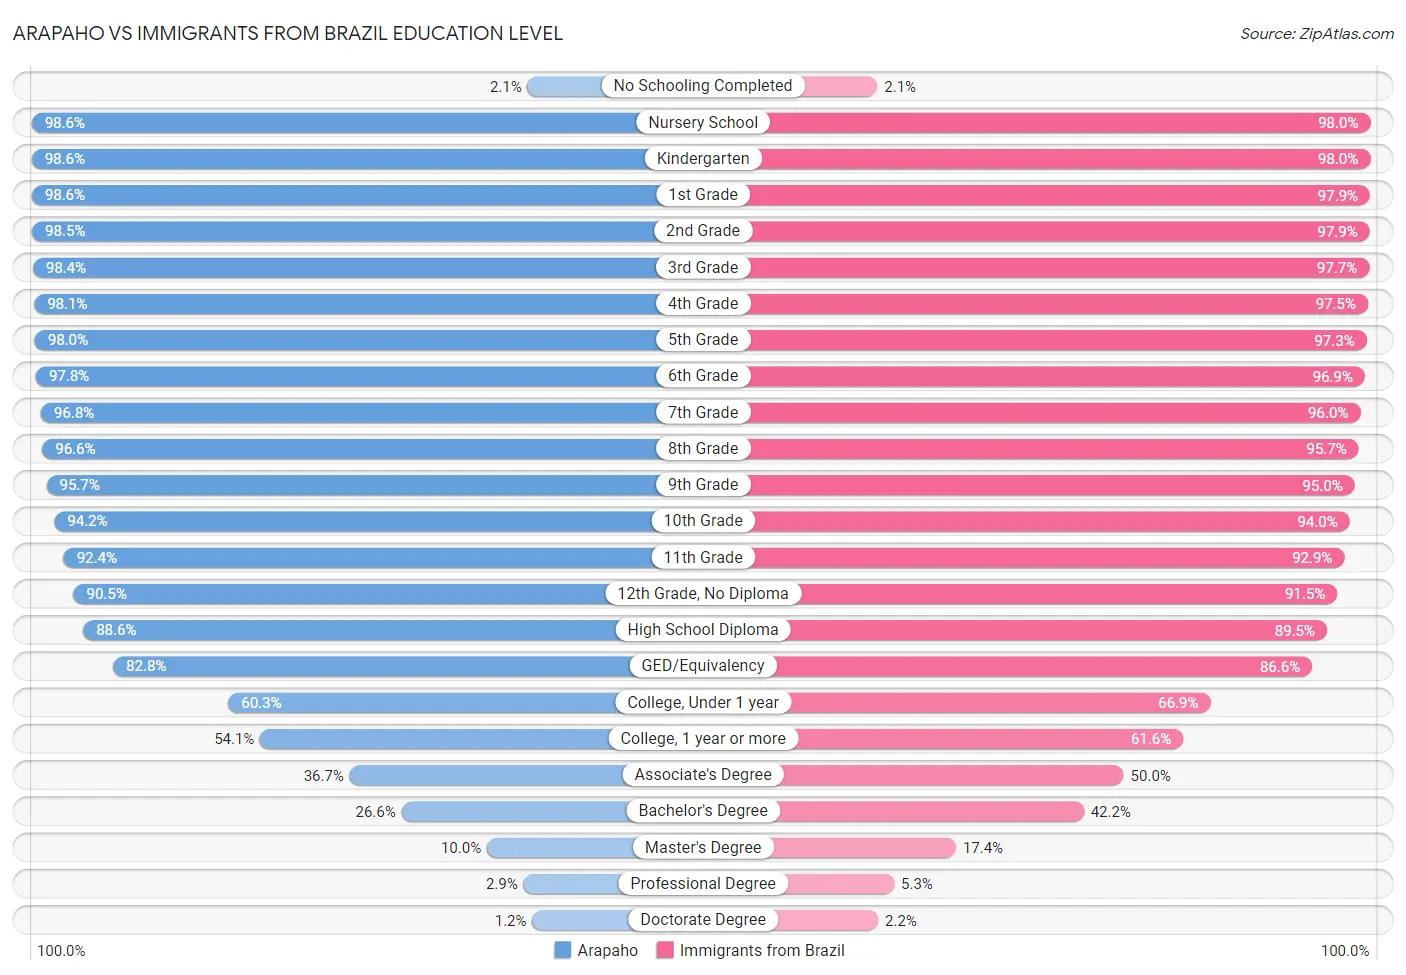 Arapaho vs Immigrants from Brazil Education Level